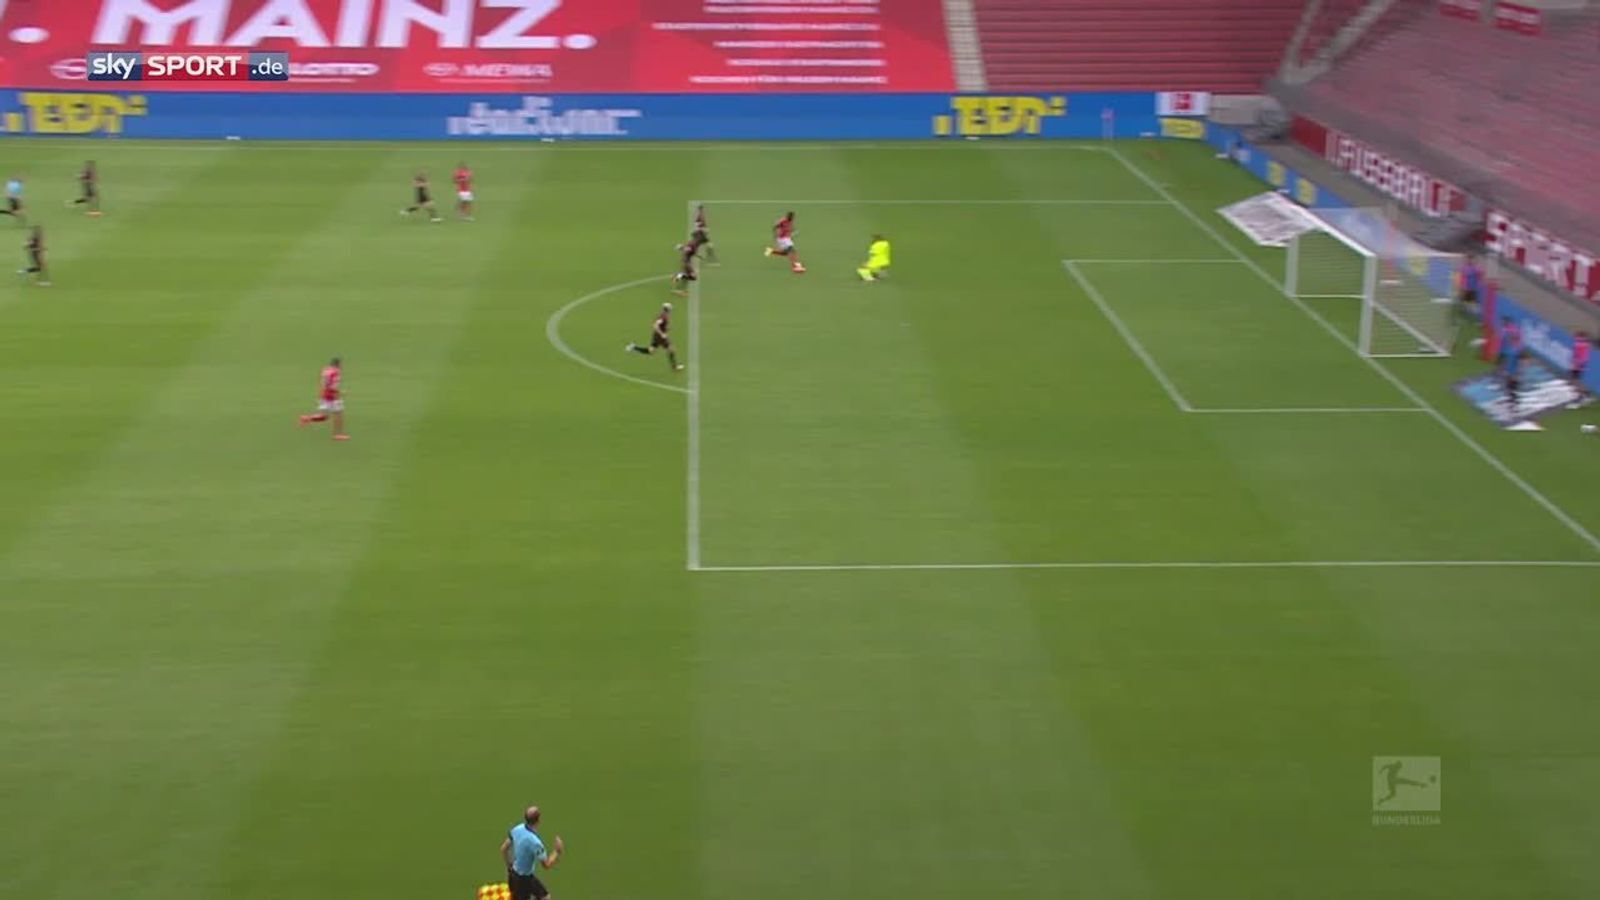 Mainz Lose to Augsburg after Niederlechner’s First-minute Goal